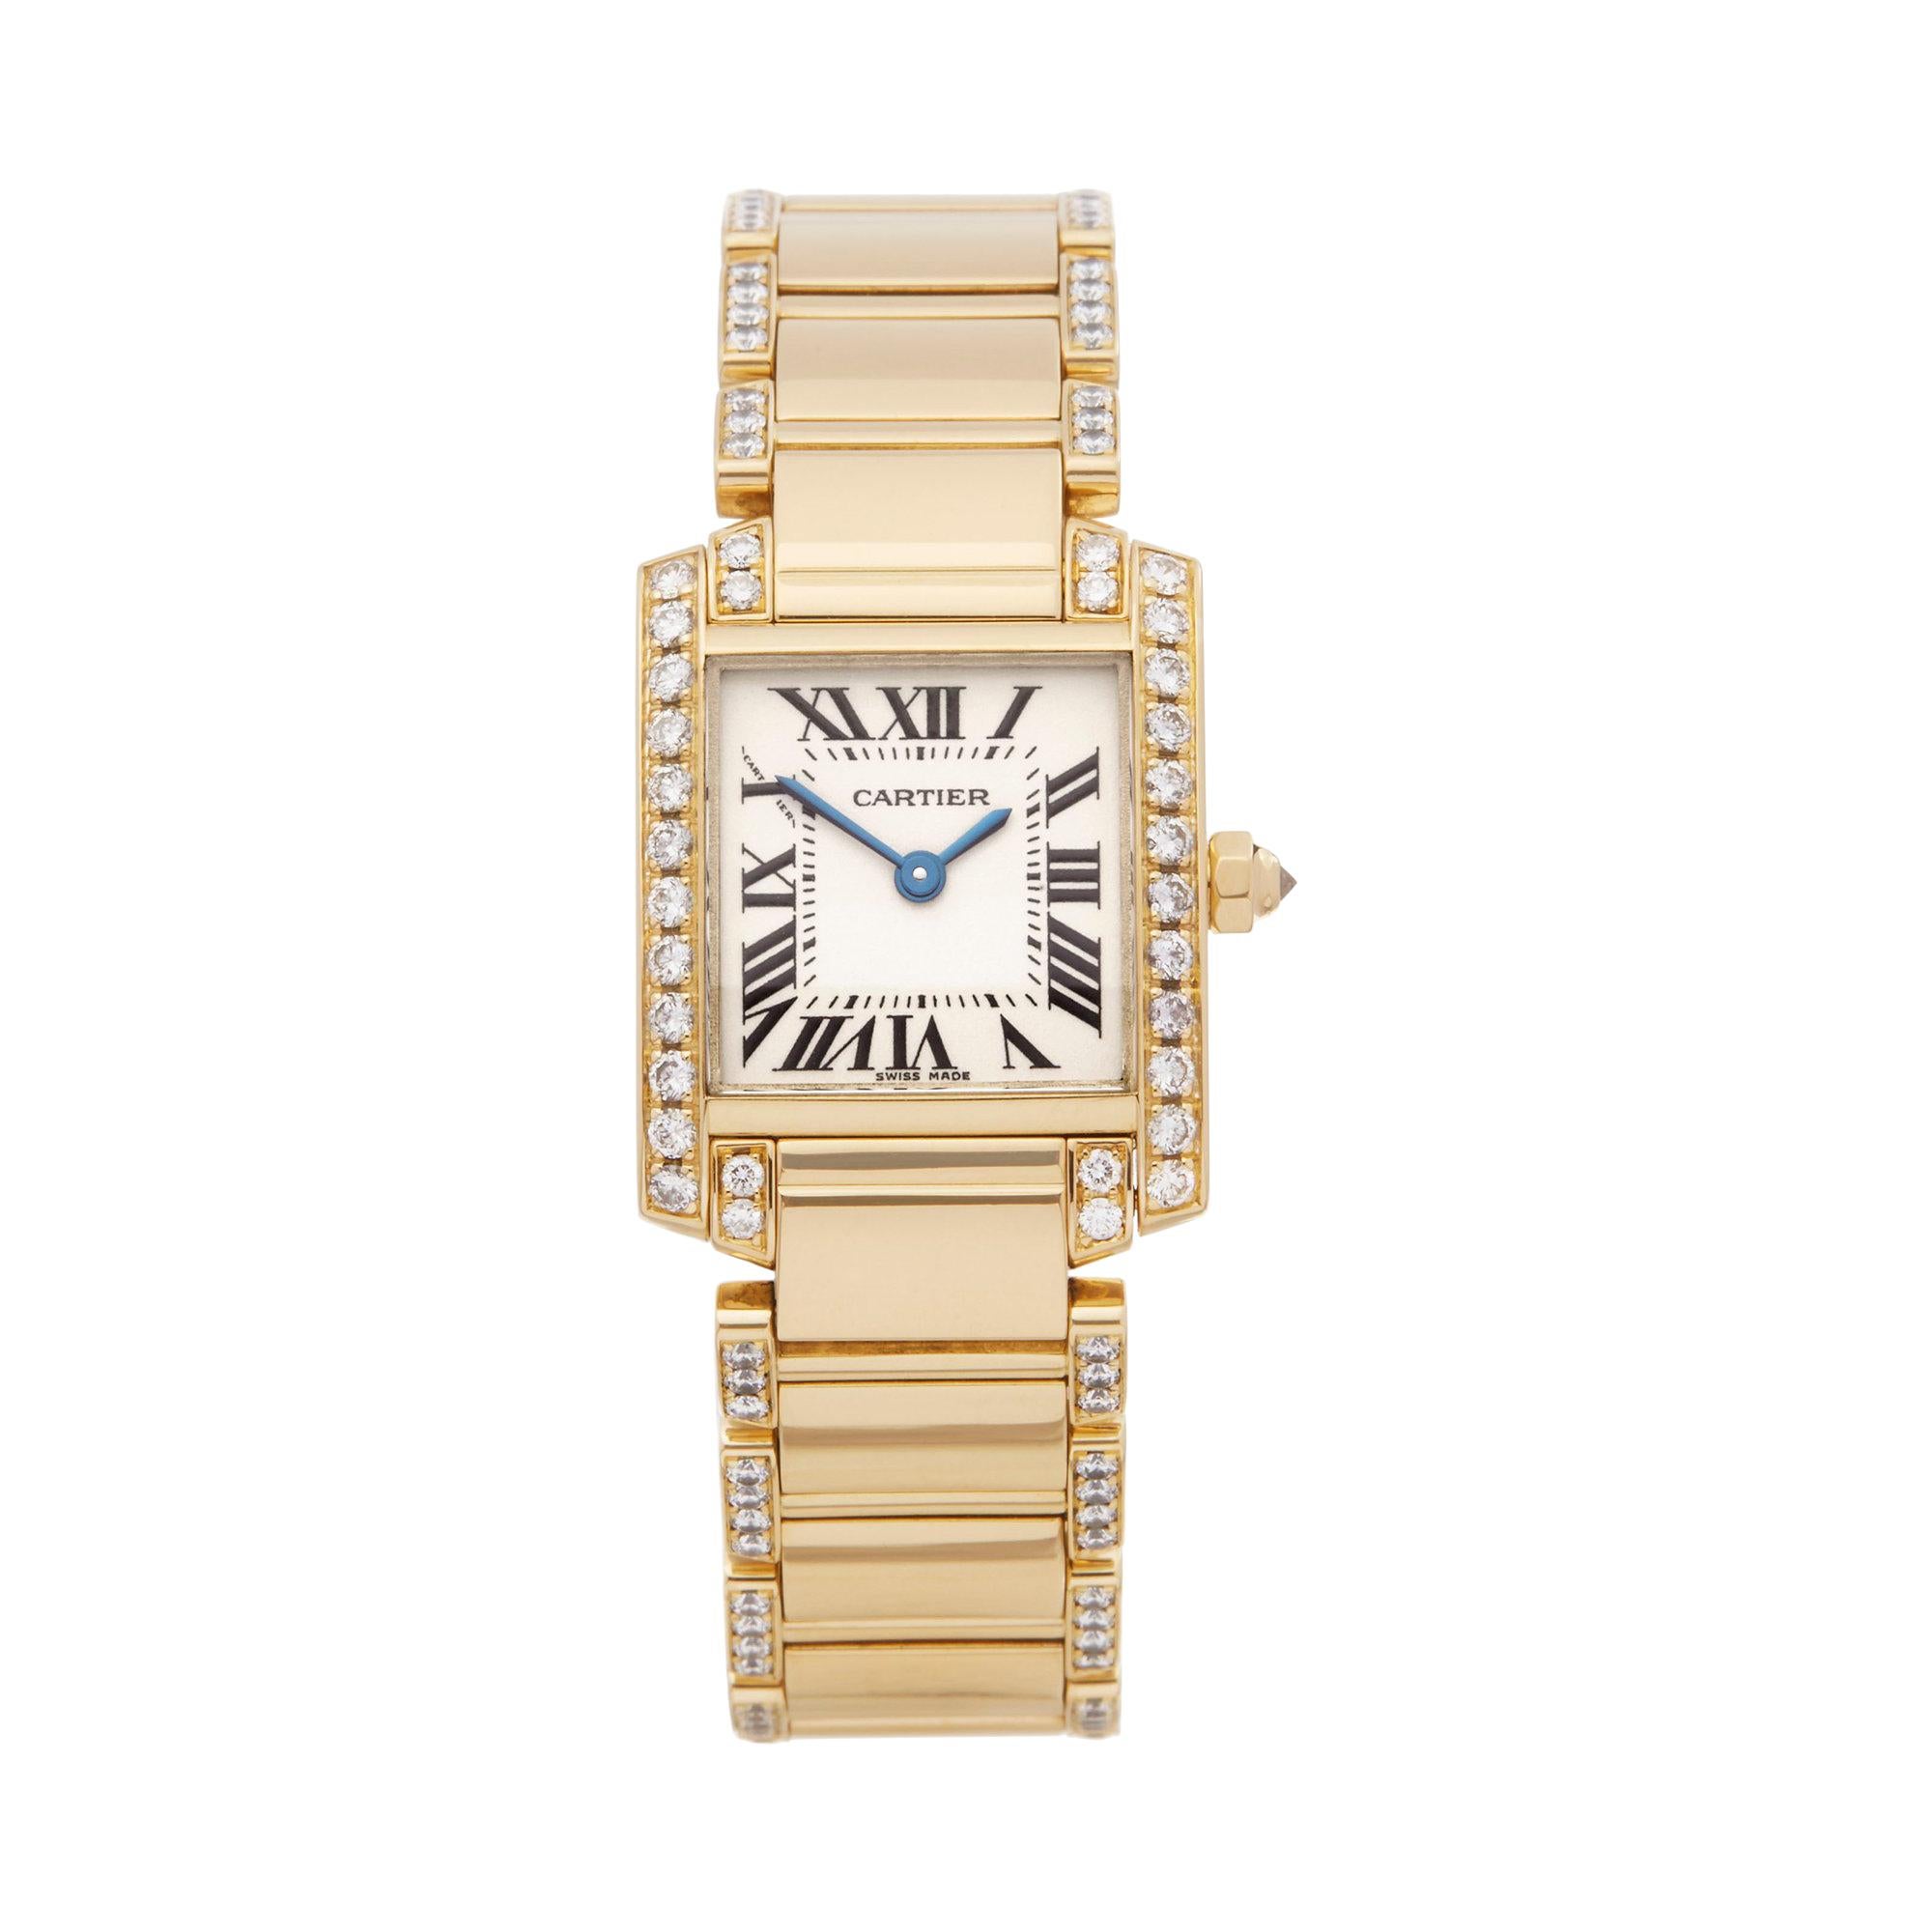 Cartier Tank Francaise Diamond 18K Yellow Gold 2385 or WE1001RG Wristwatch